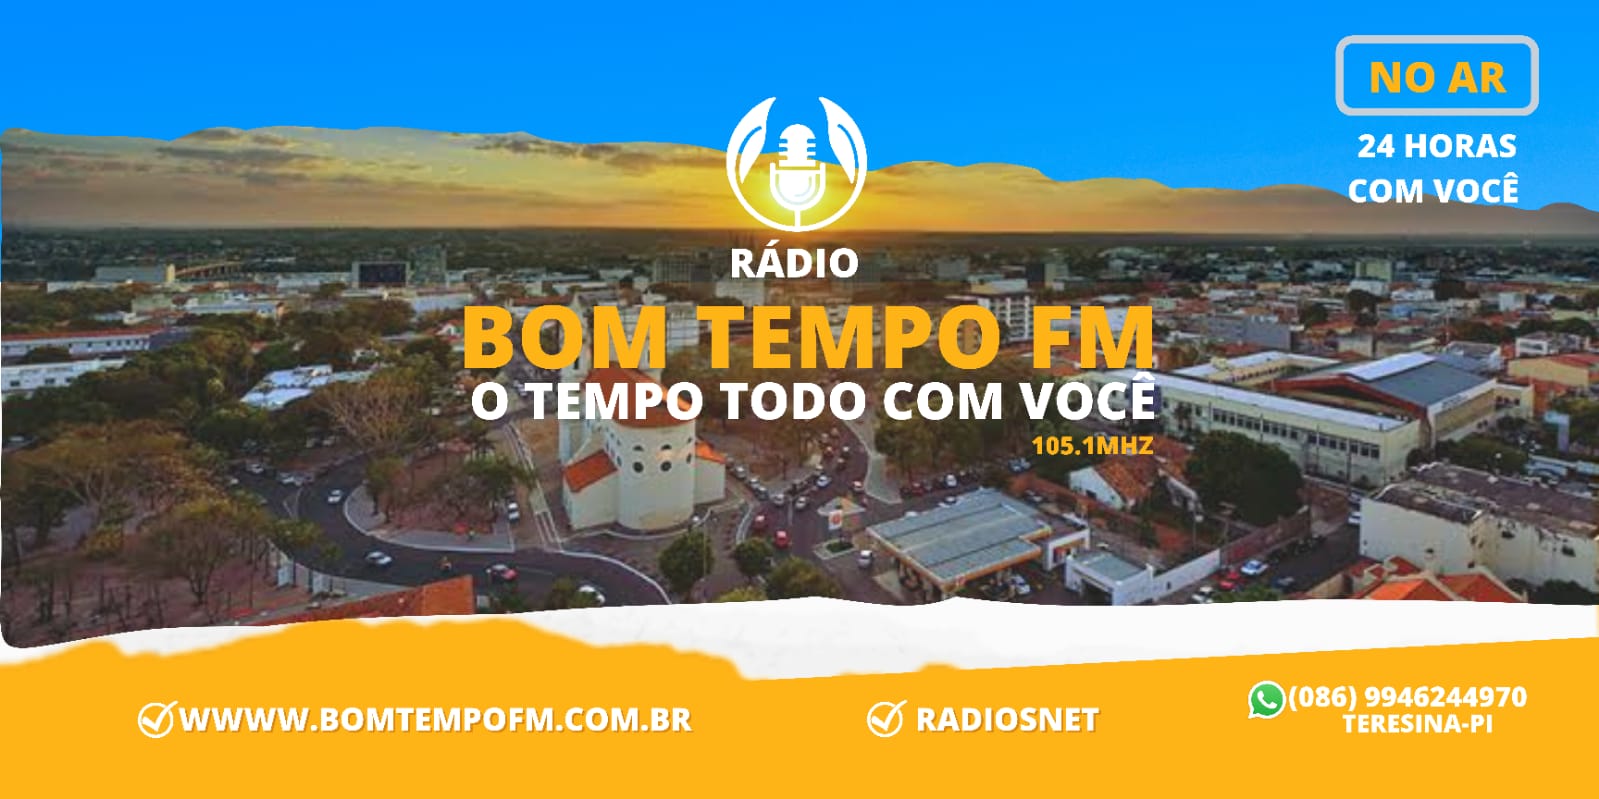 (c) Bomtempofm.com.br